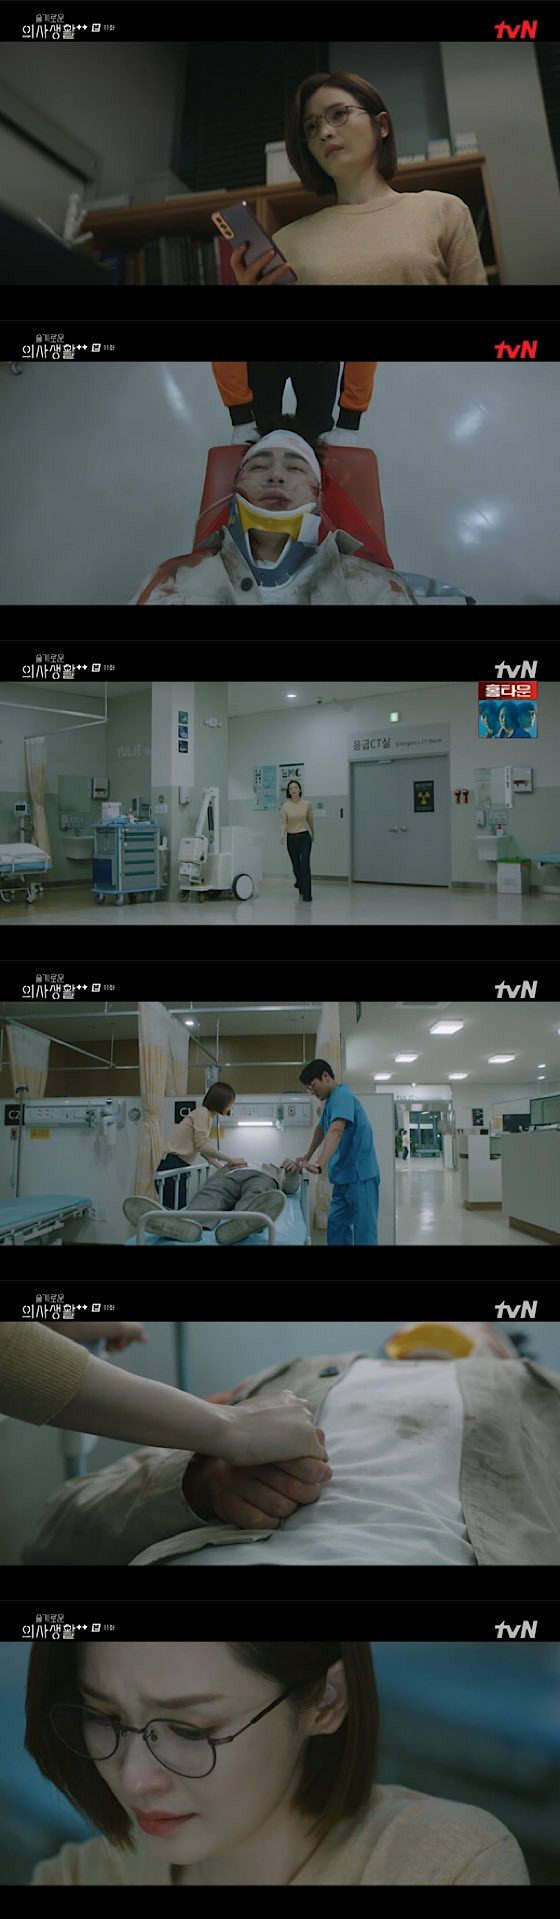 ≪Korean TV Series NOW≫ "Wise Doctor Life Season 2" EP11, Cho Jong-seok is robbed on his birthday... Jung Mi-do = plot spoiler